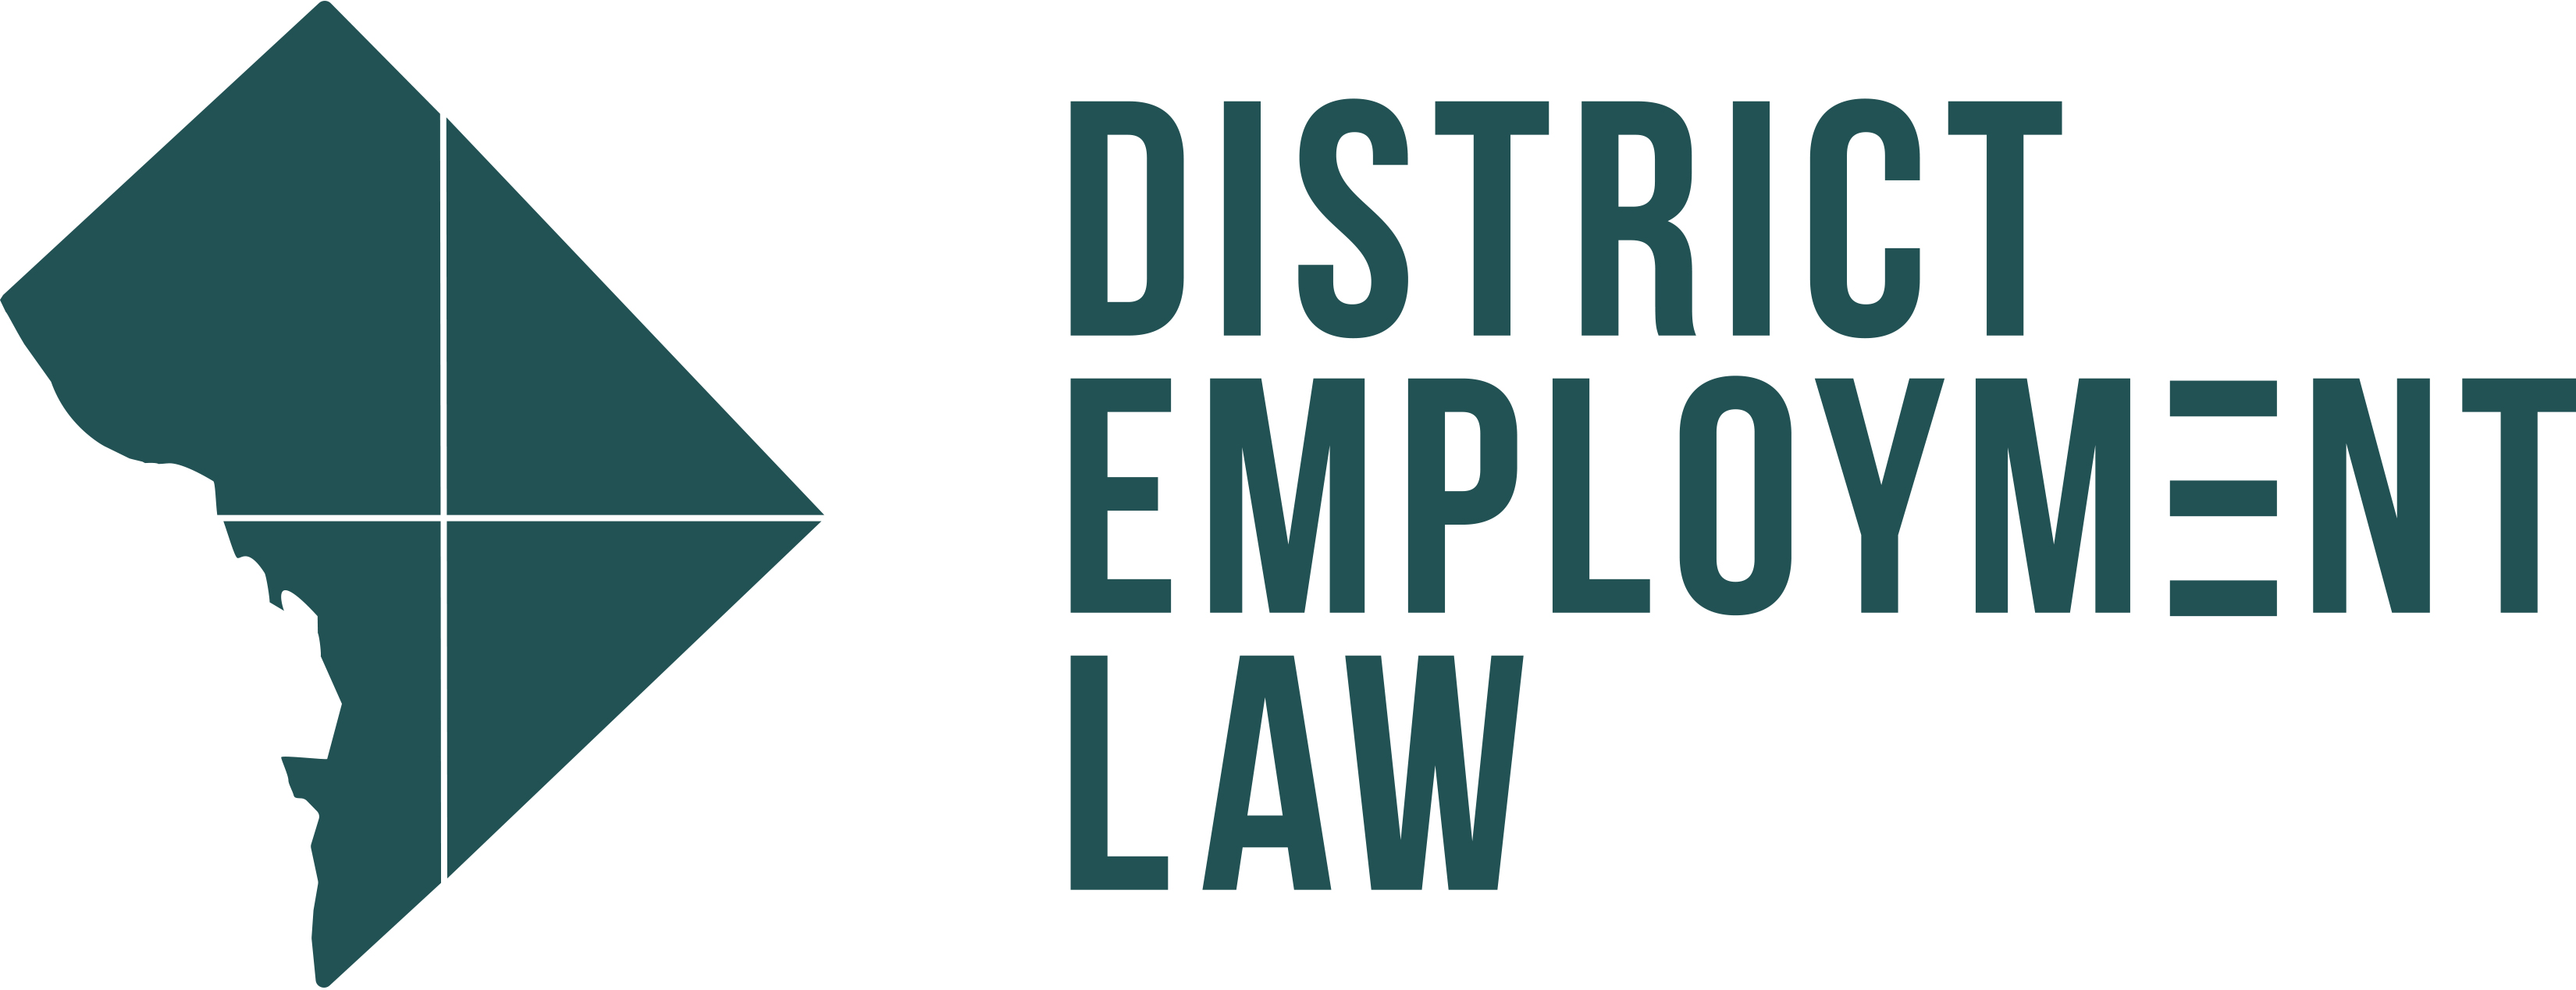 District Employment Law